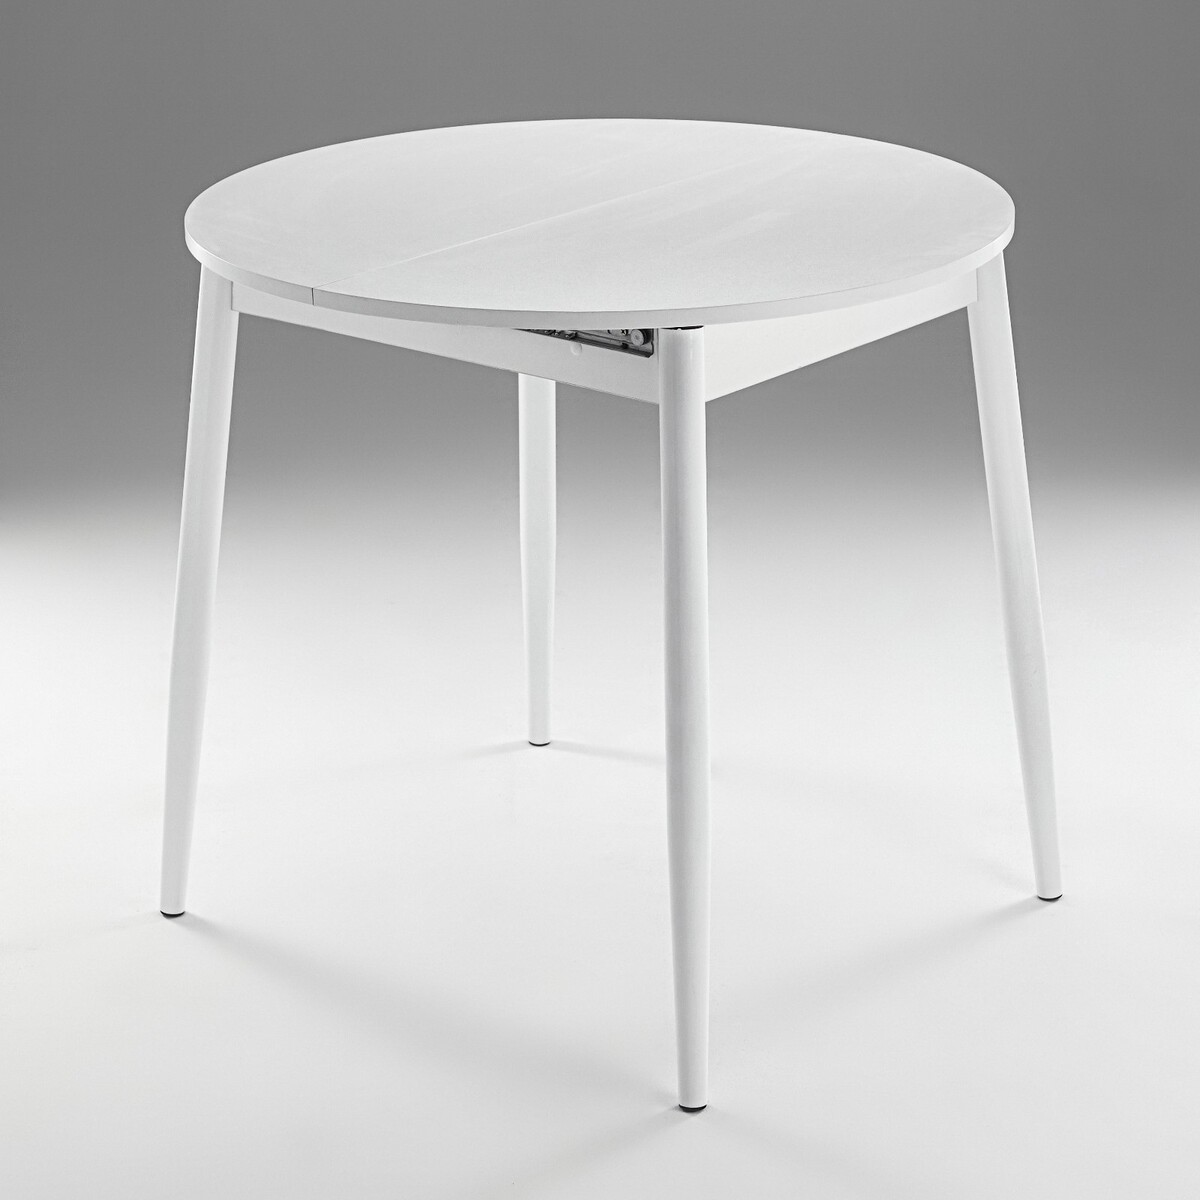 Стол раздвижной круглый раздвижной стол фристайл 3 1000 1420×632×745 мм лдсп стекло металл белый